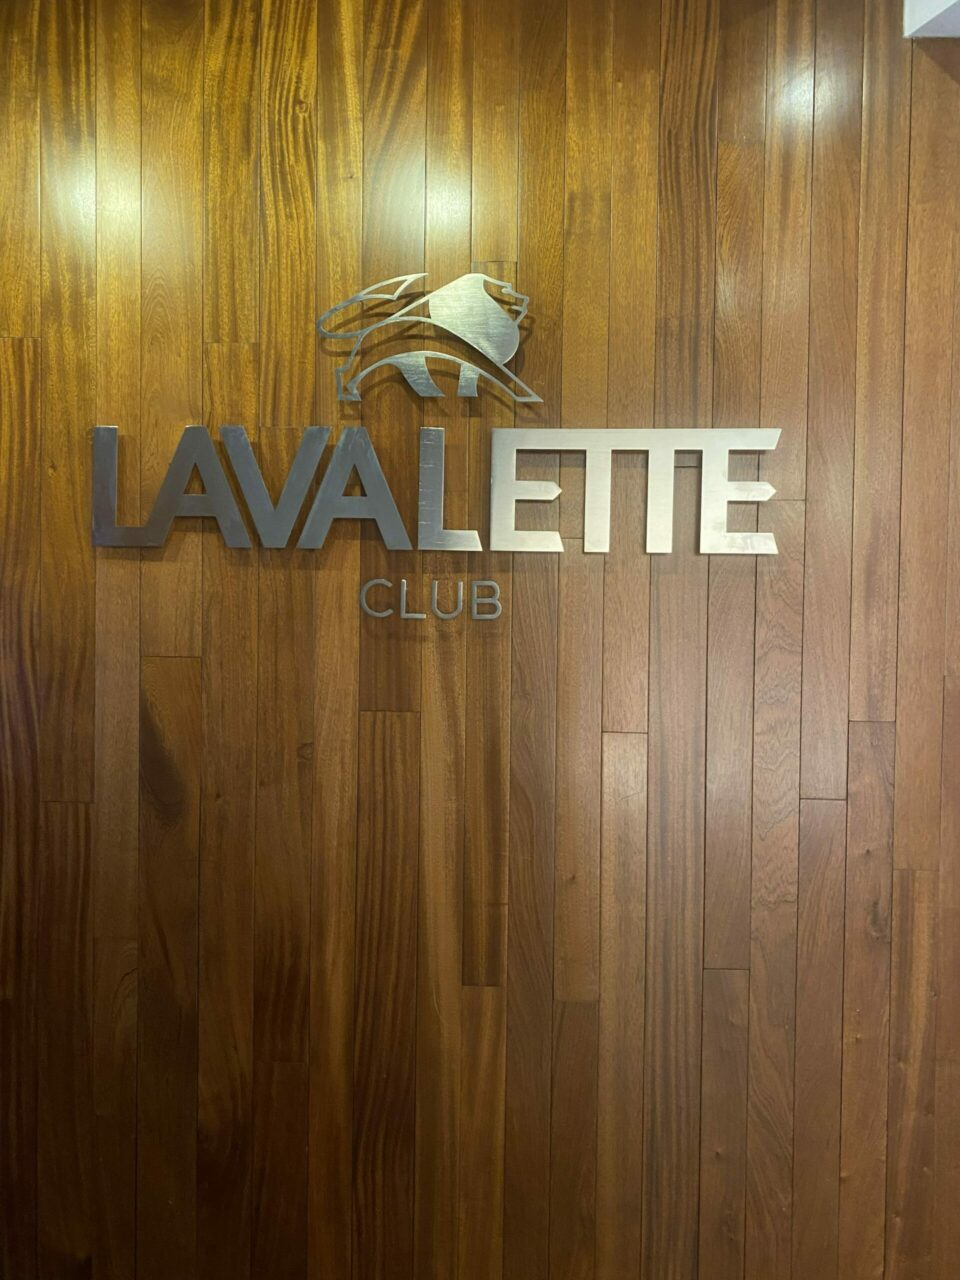 Lavalette Club Lounge 